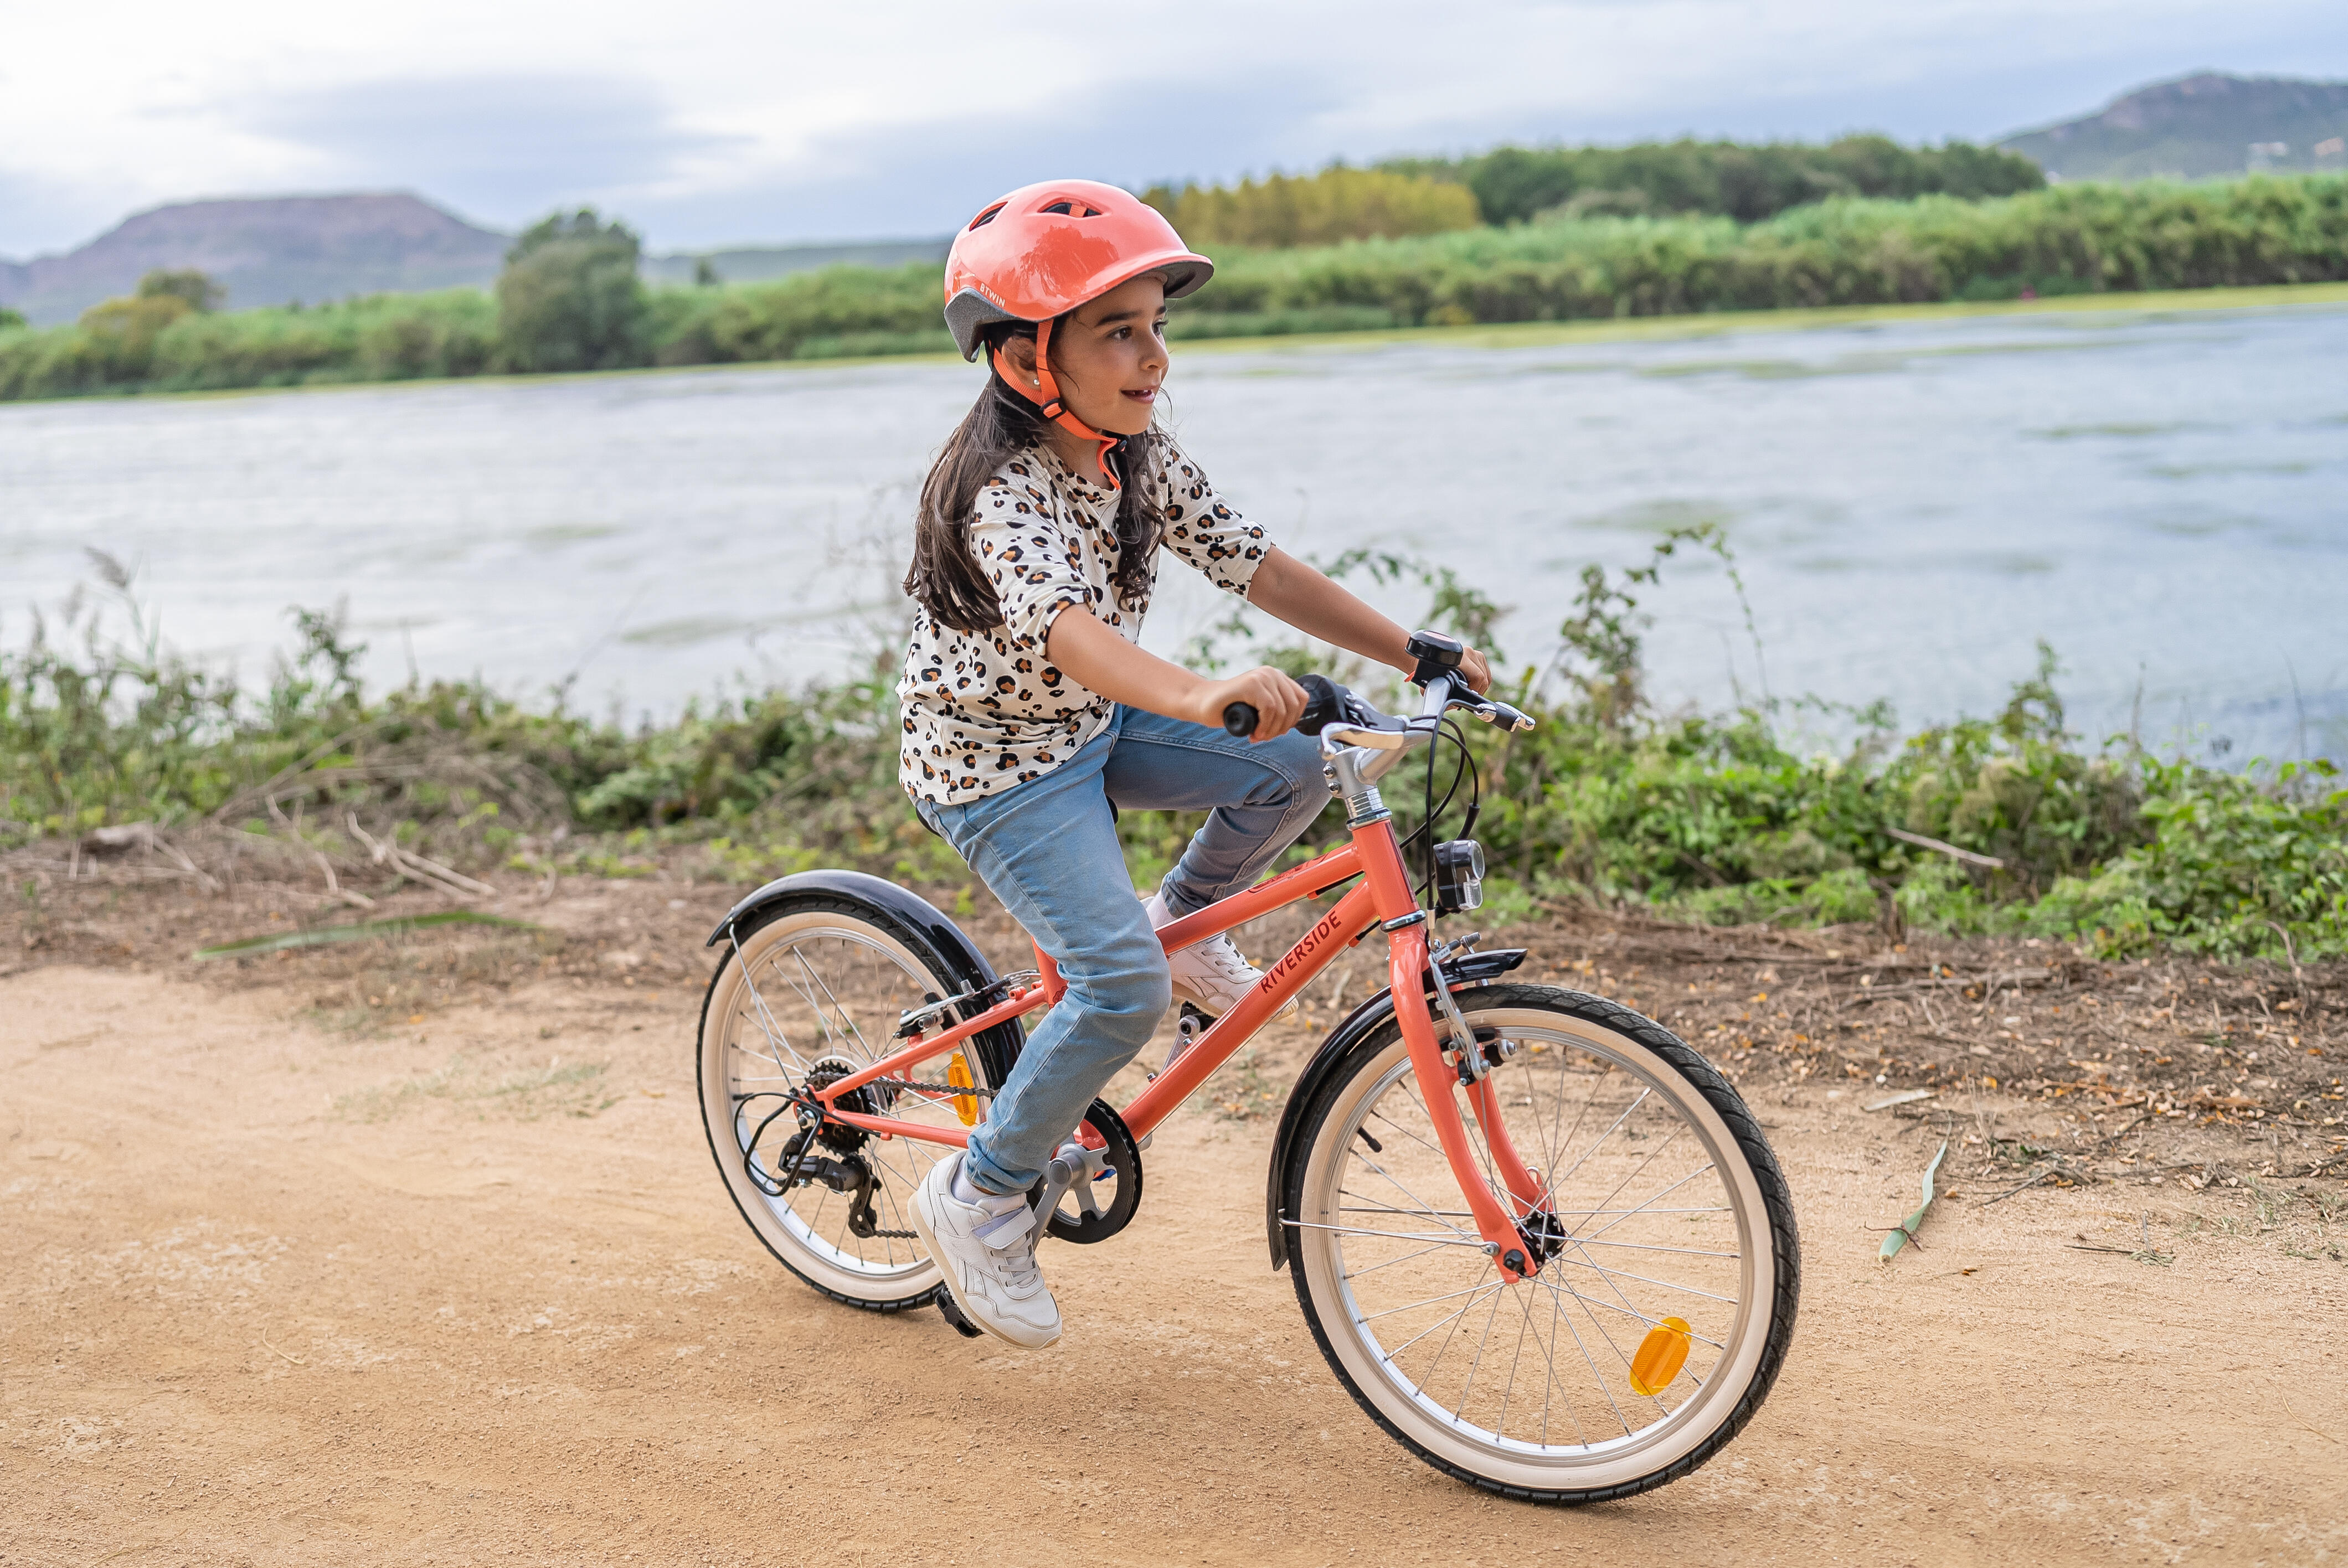 Kids' Bike Helmet - KH 500 Pink - BTWIN